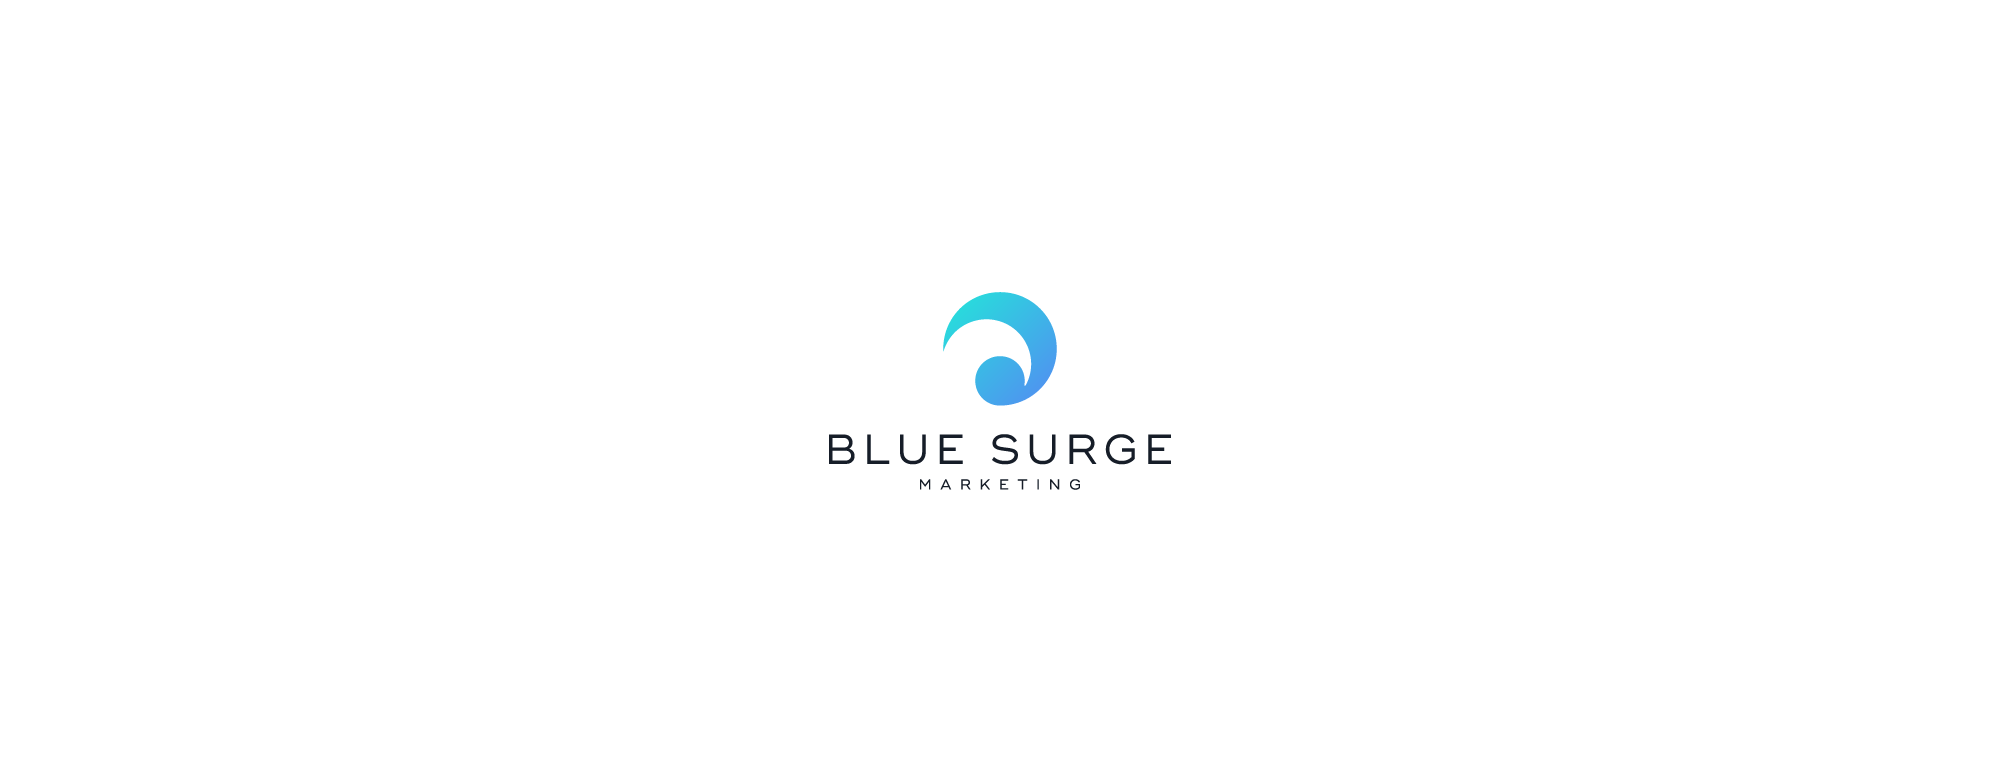 Blue Surge Marketing Agency